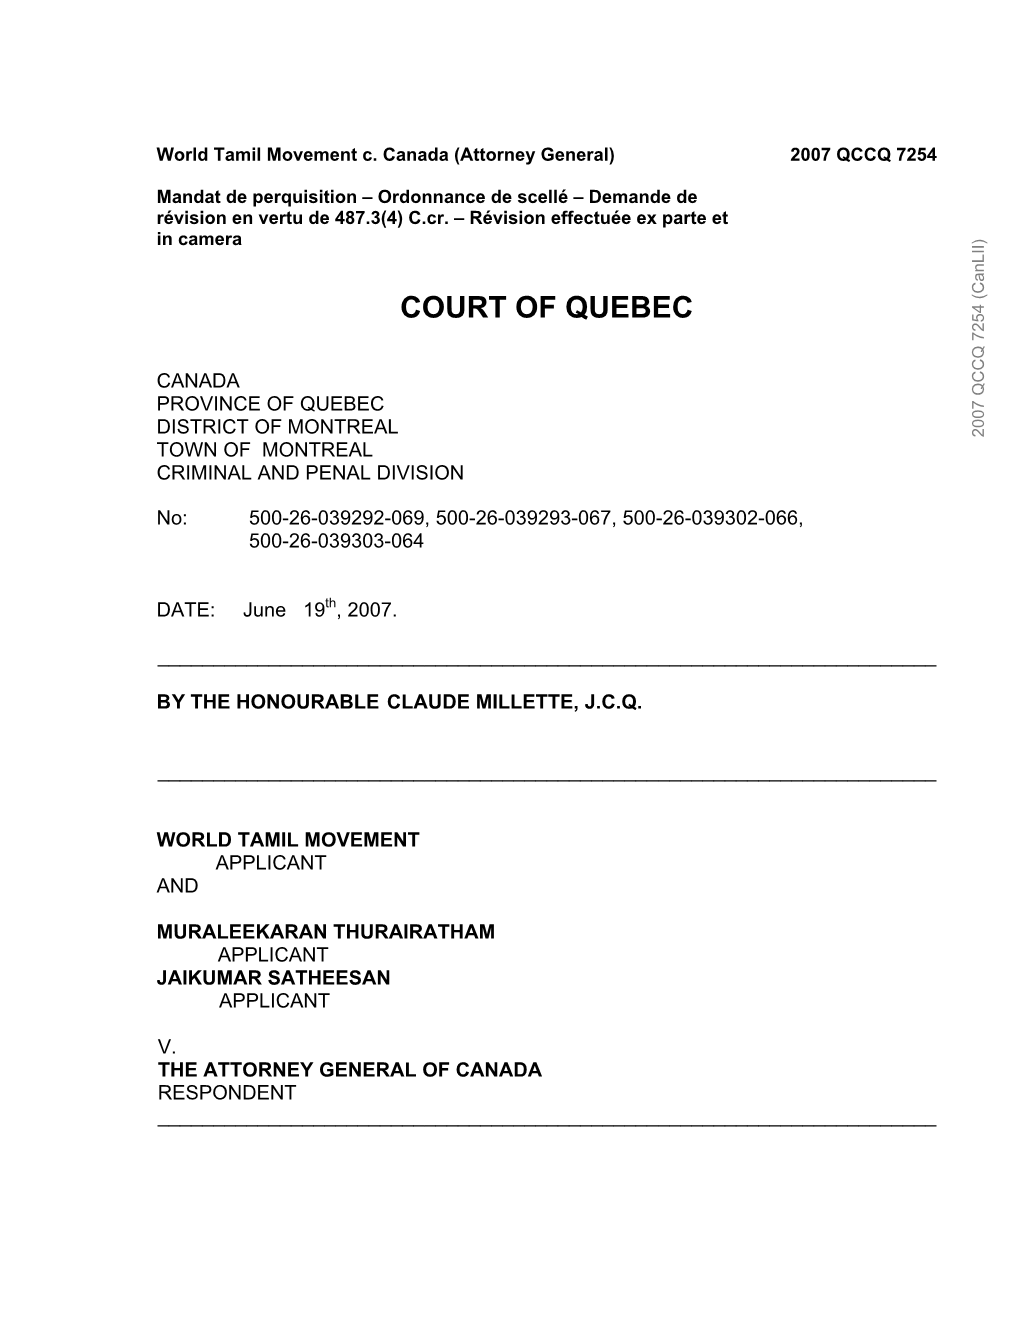 Court of Quebec